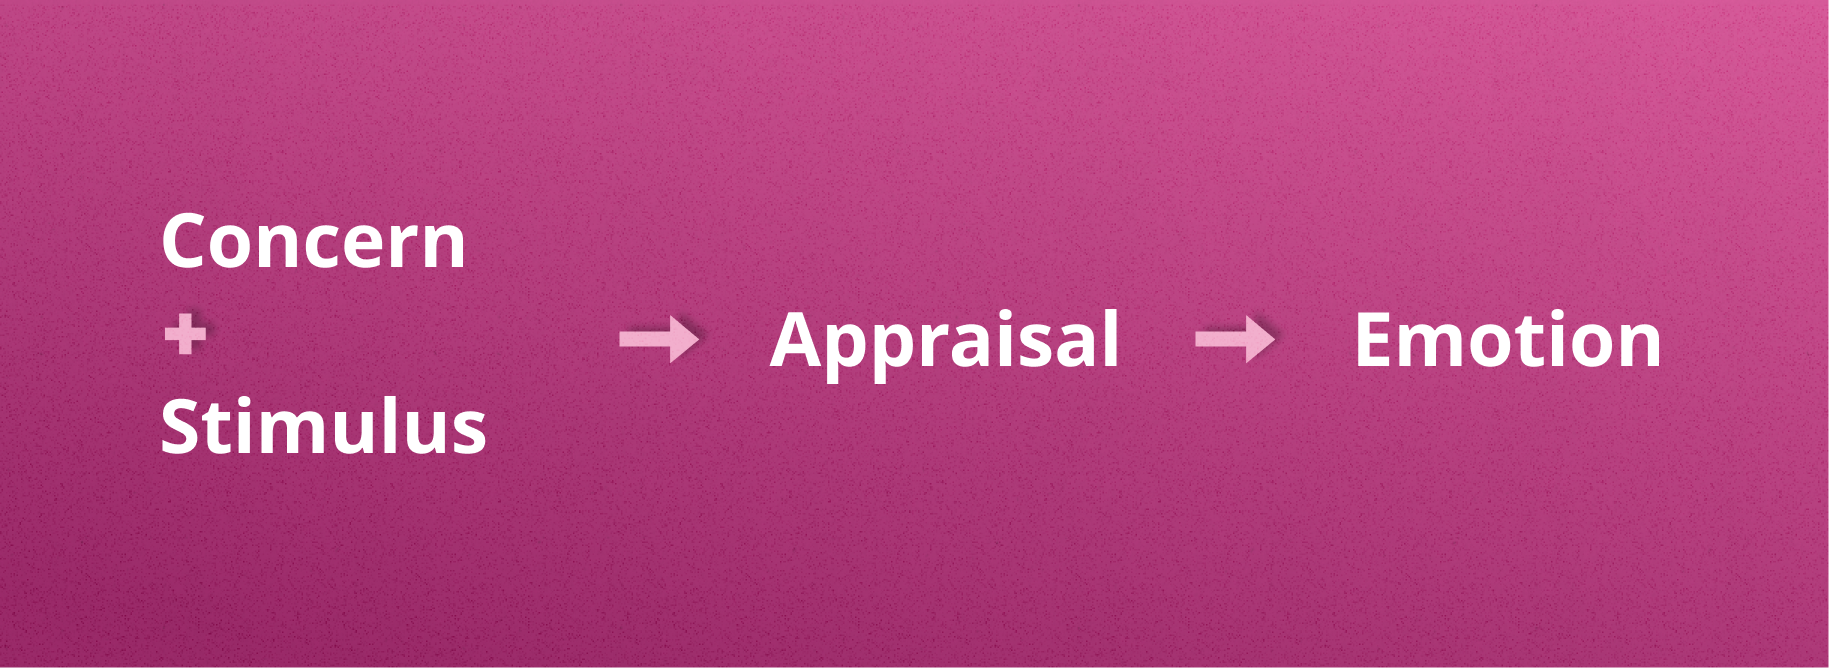 Text: "Concern + stimulus" then "Appraisal" then "Emotion"